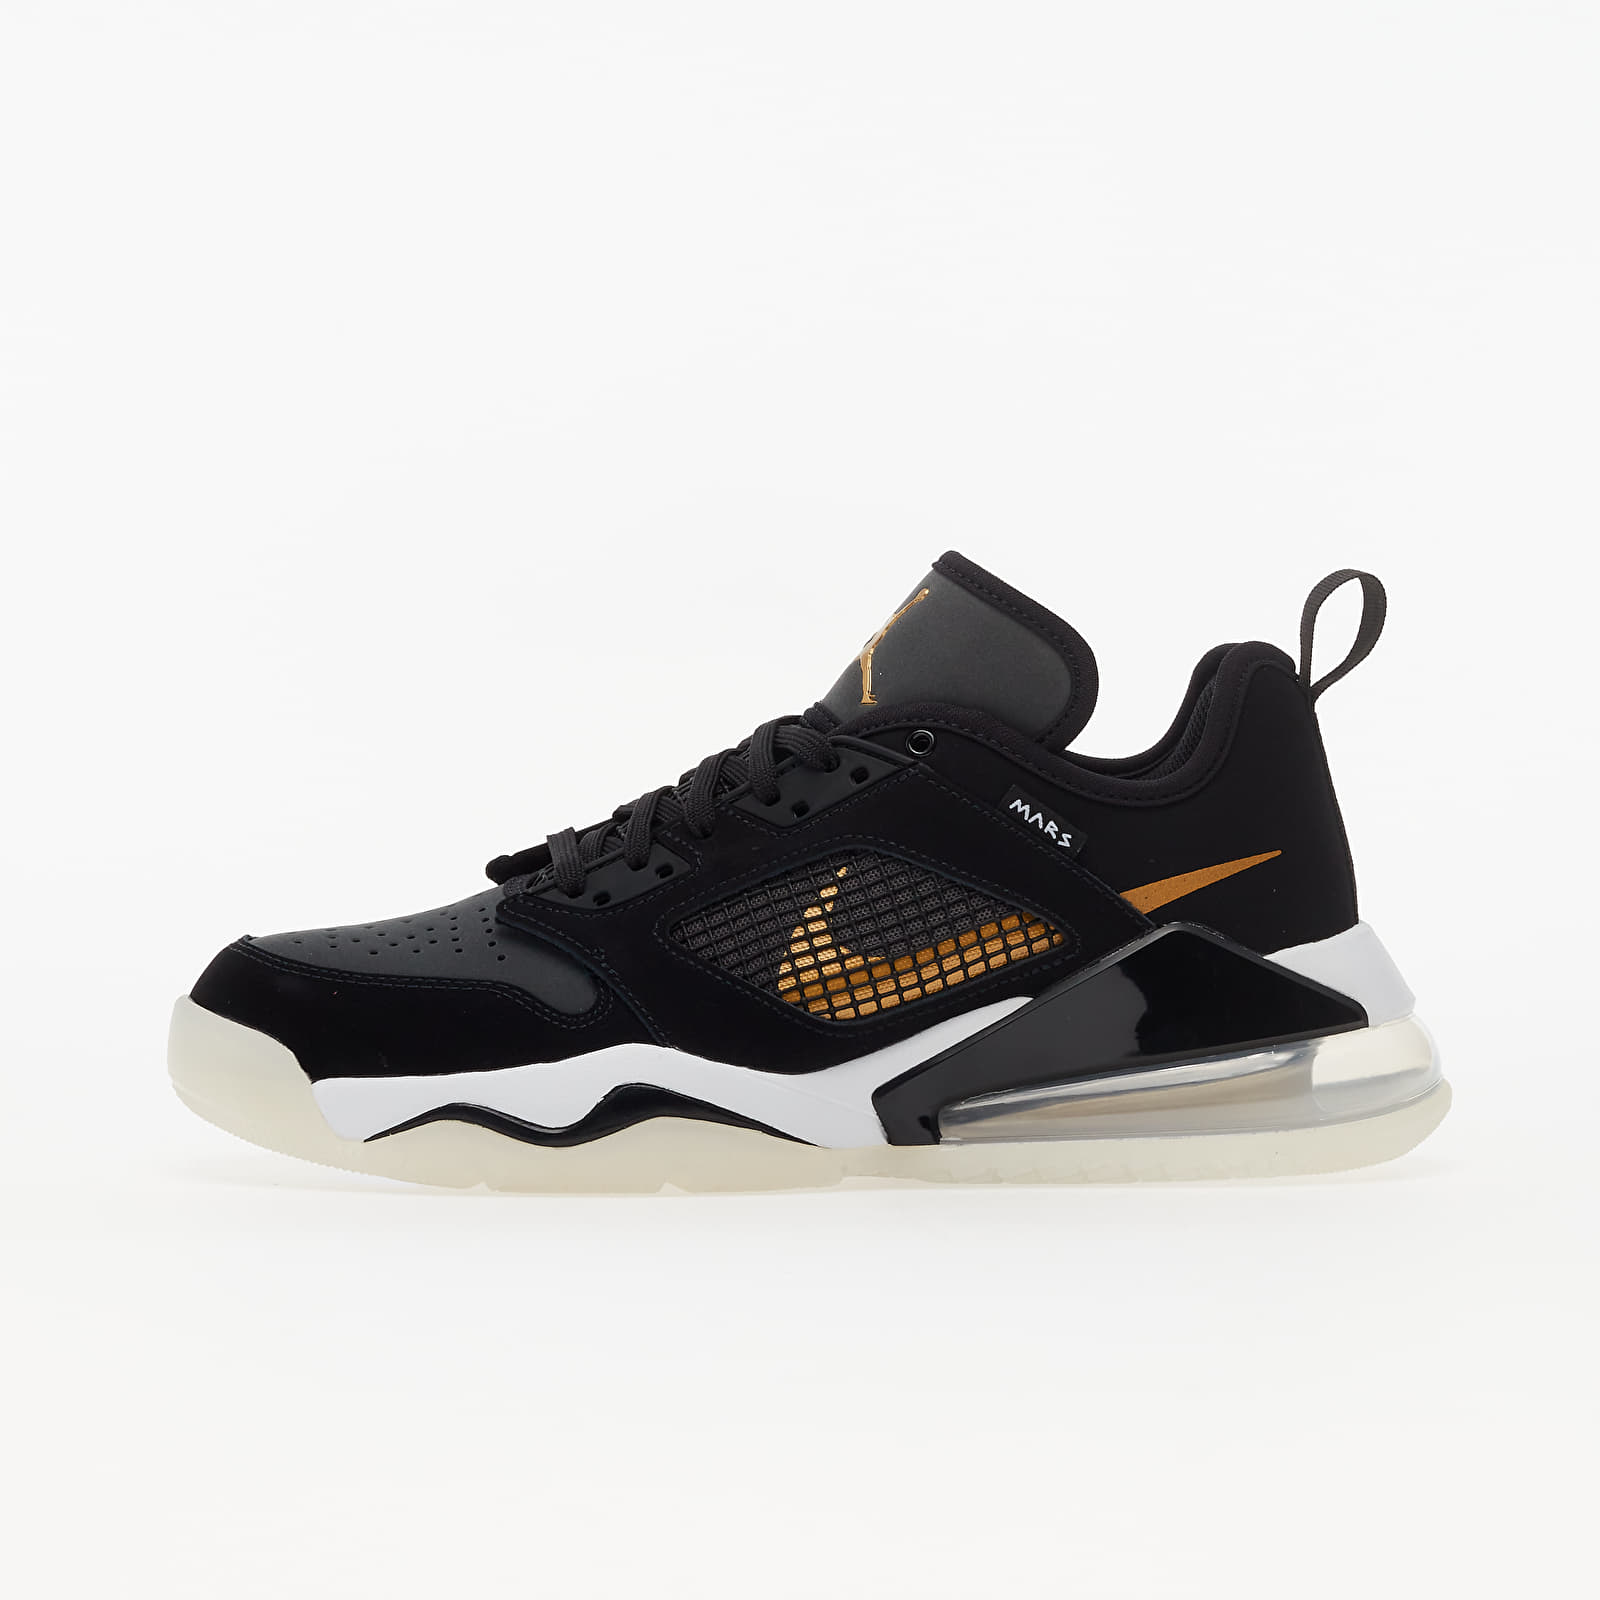 Herren Sneaker und Schuhe Jordan Mars 270 Low Black/ Metallic Gold-Dk Smoke Grey-White